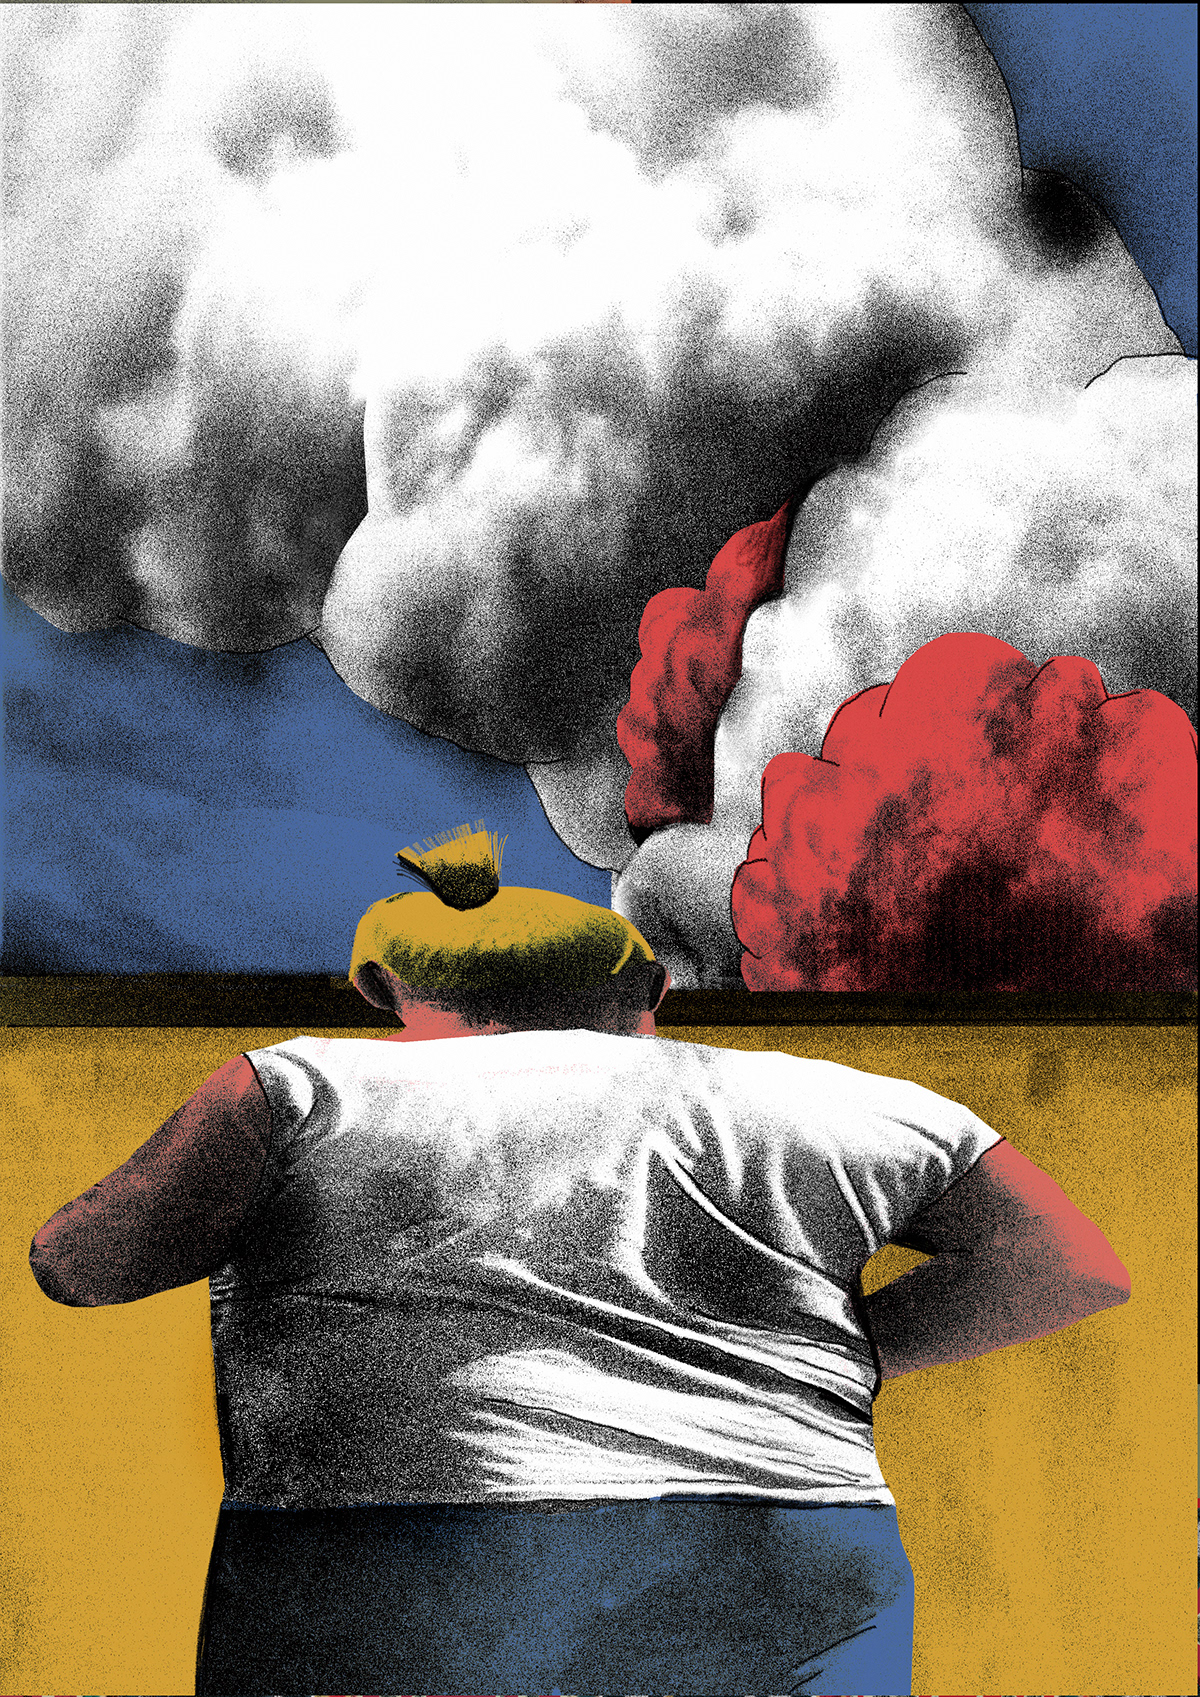 editorial fire Media Illustration resistance russian aggression smoke ukraine ukrainian art war in Ukraine